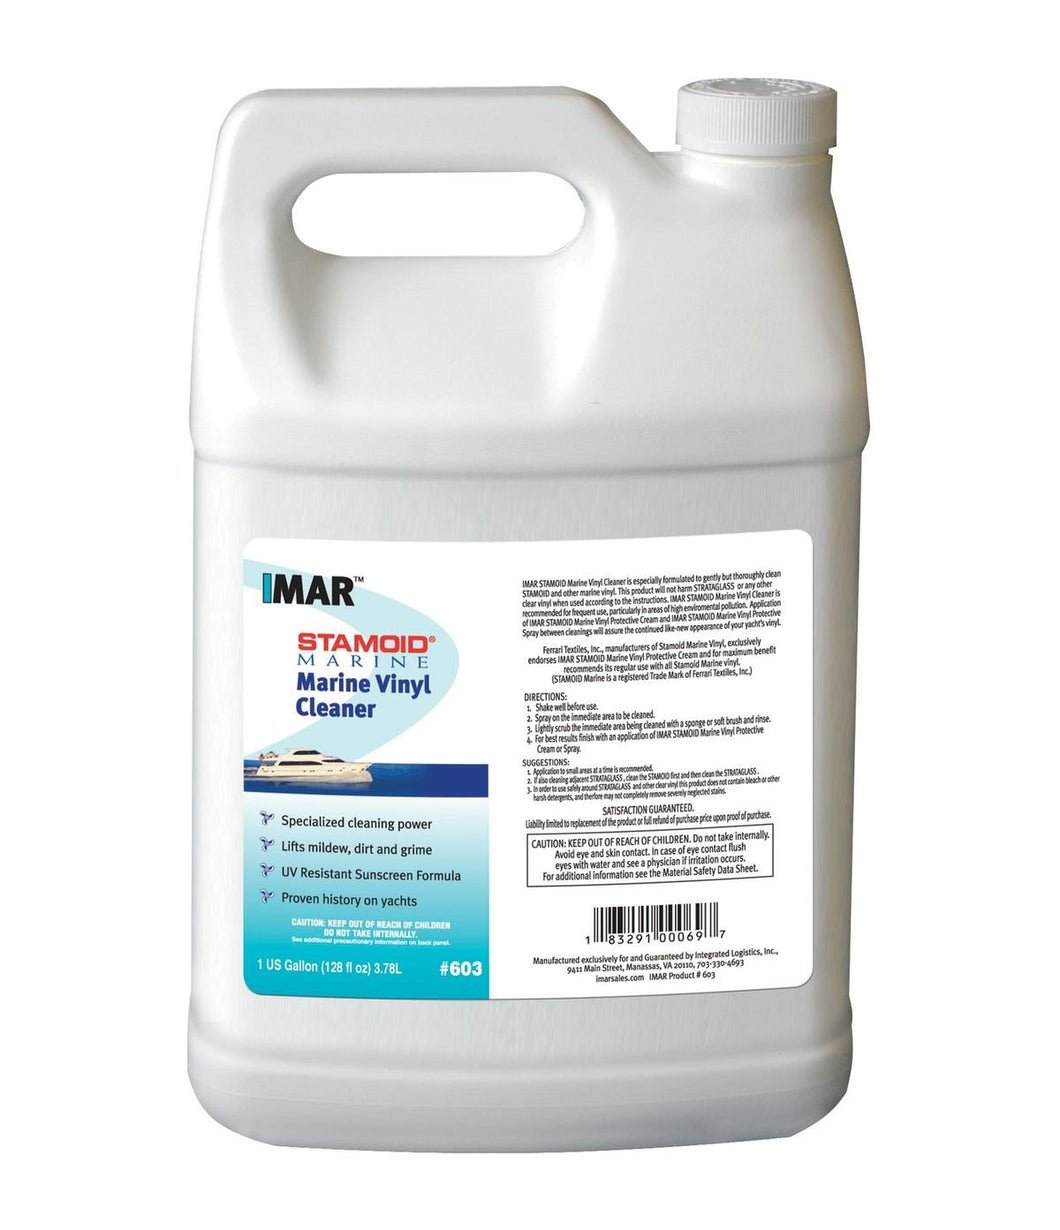 Imar Stamoid Marine Vinyl Cleaner #603-1 Gallon